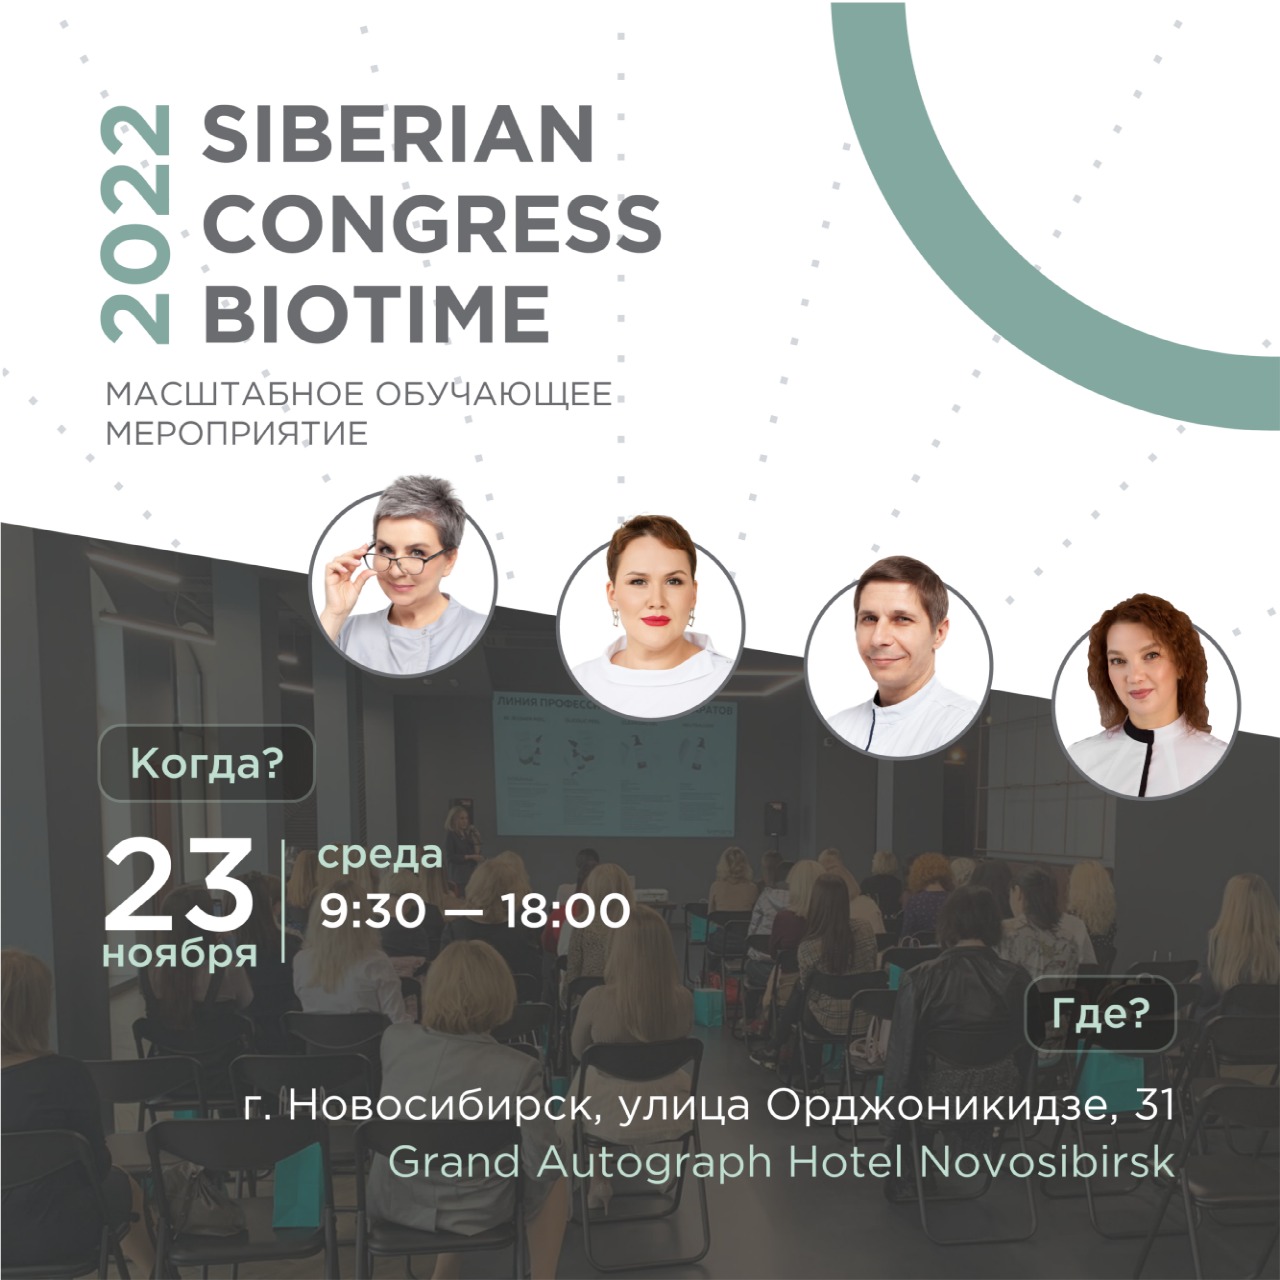 Siberian Congress Biotime 2022